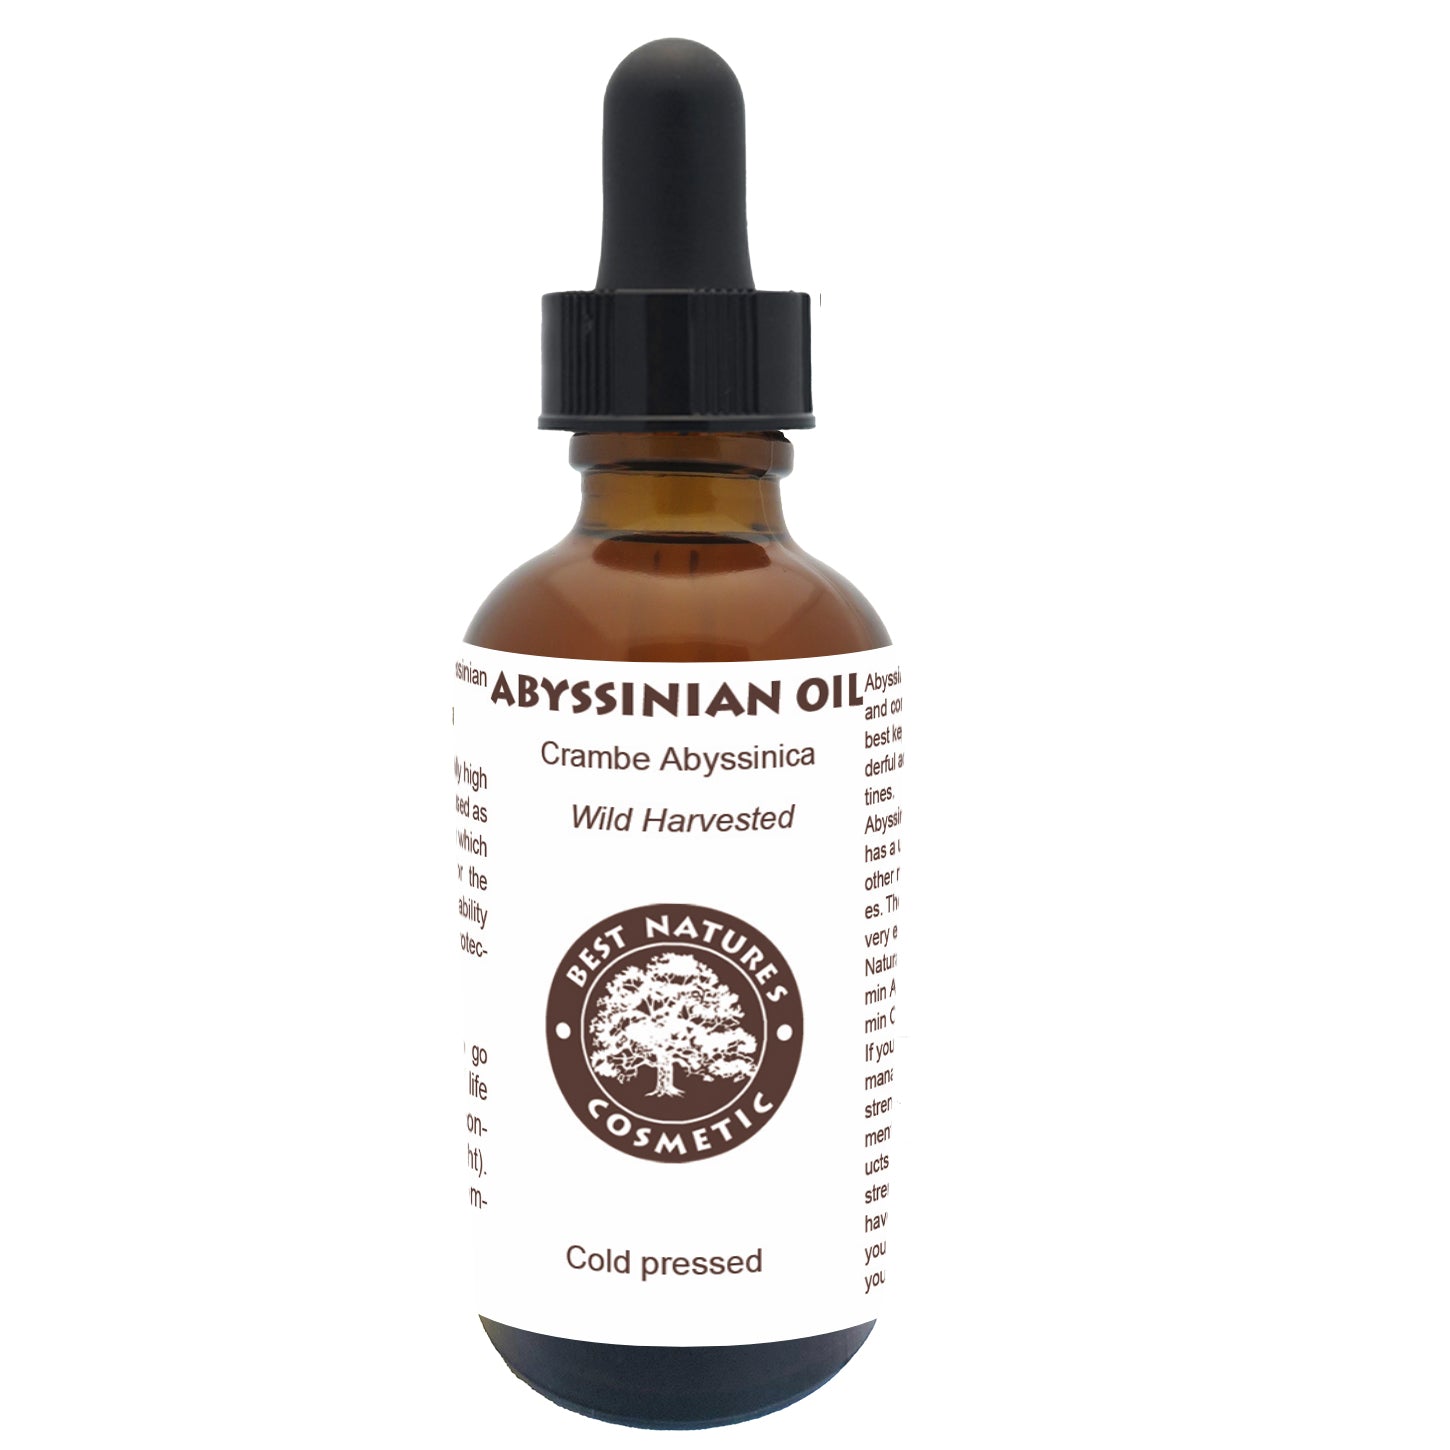 Abyssinian Oil for hairs - manageability, shine, moisture, and lustre, hair glossy feel, detangling, strengthening of hair fibers.